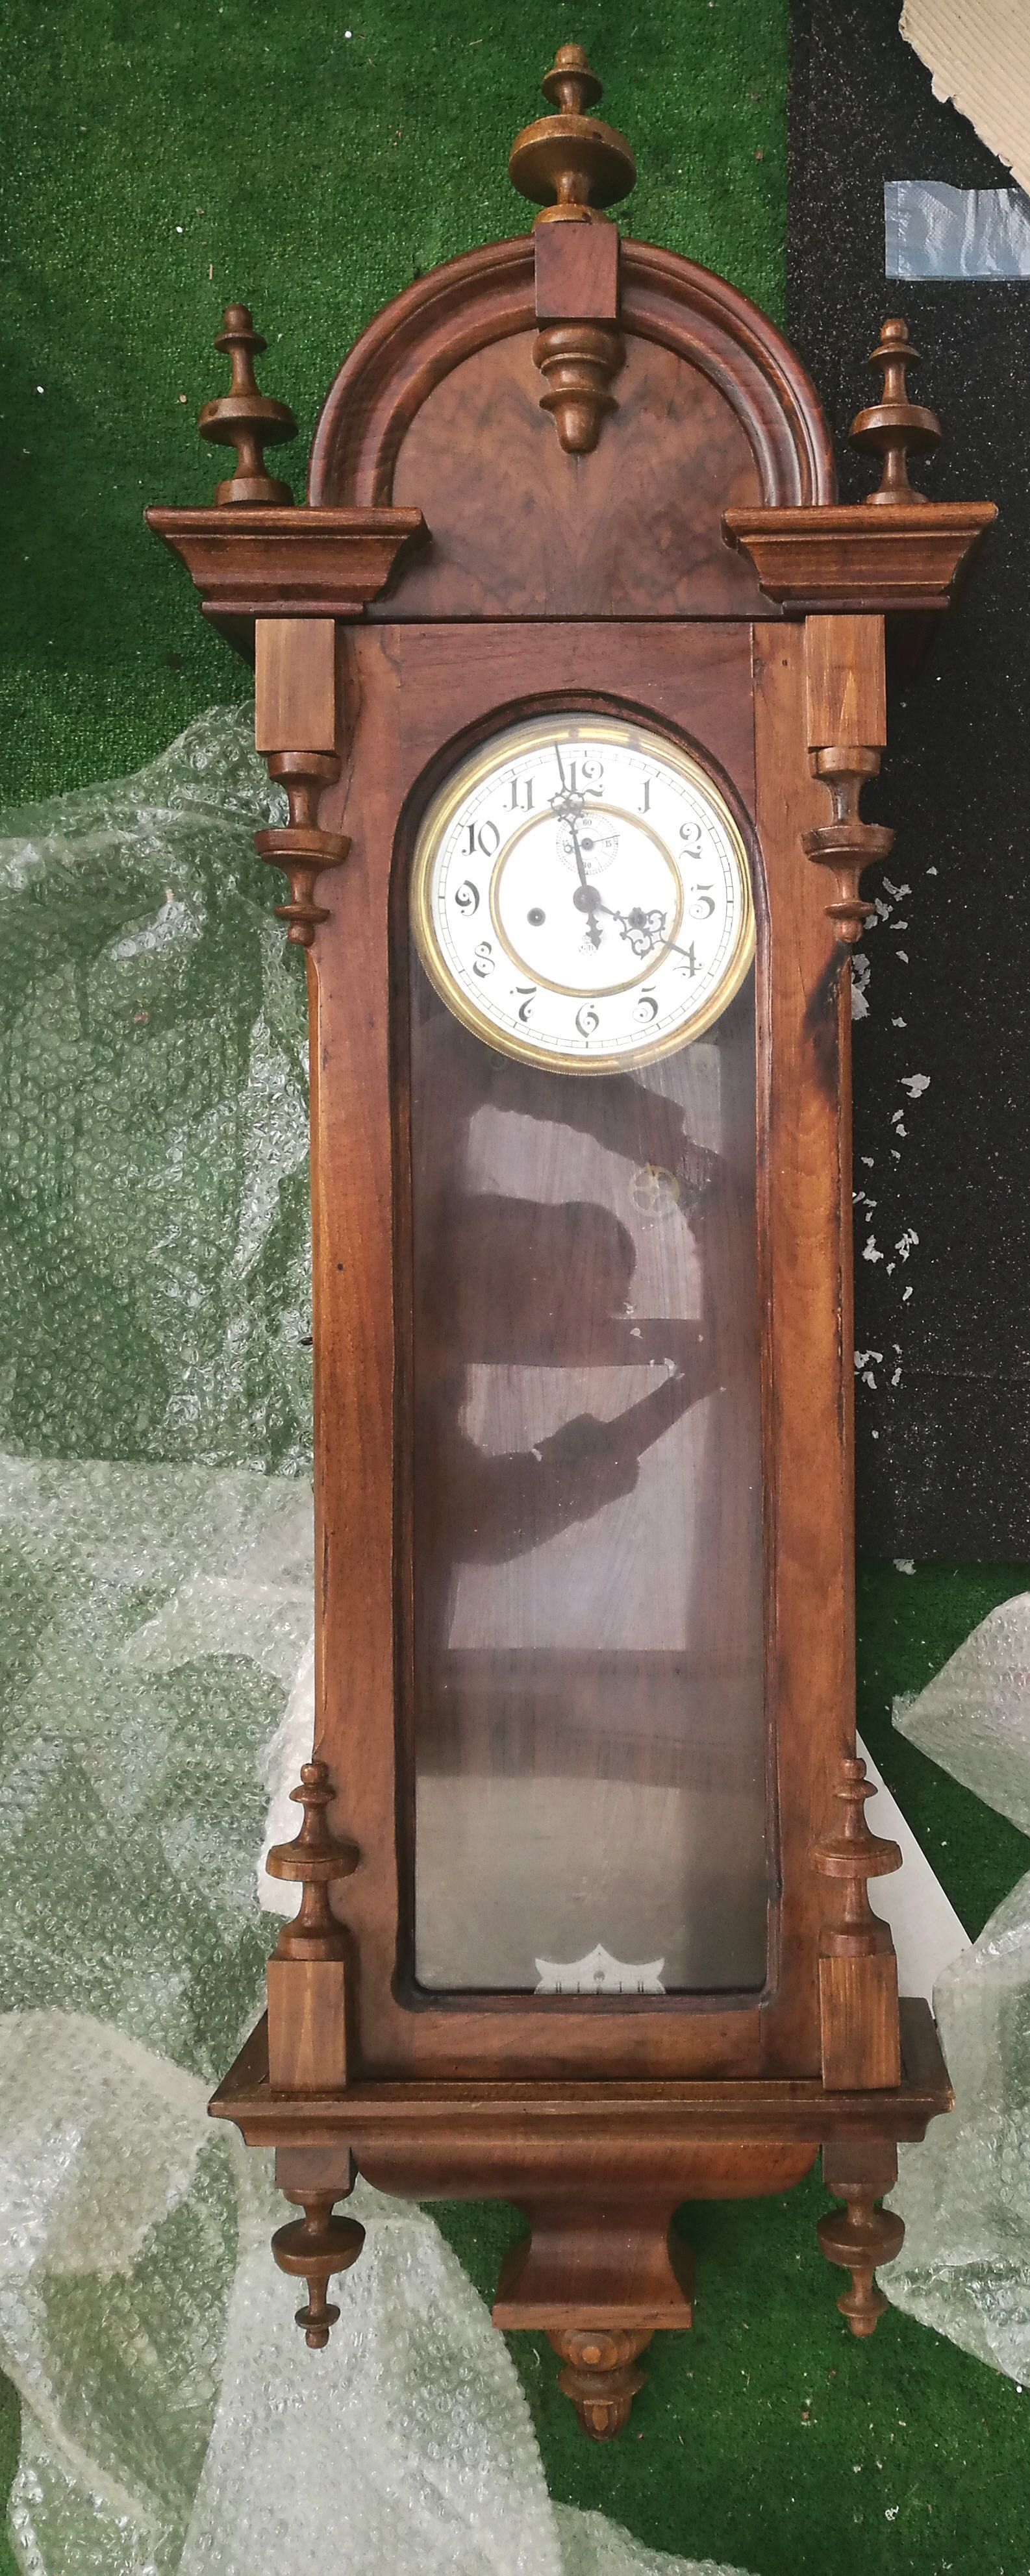 carcasa din lemn pentru ceas de semineu.
ceas  Gustav Becker